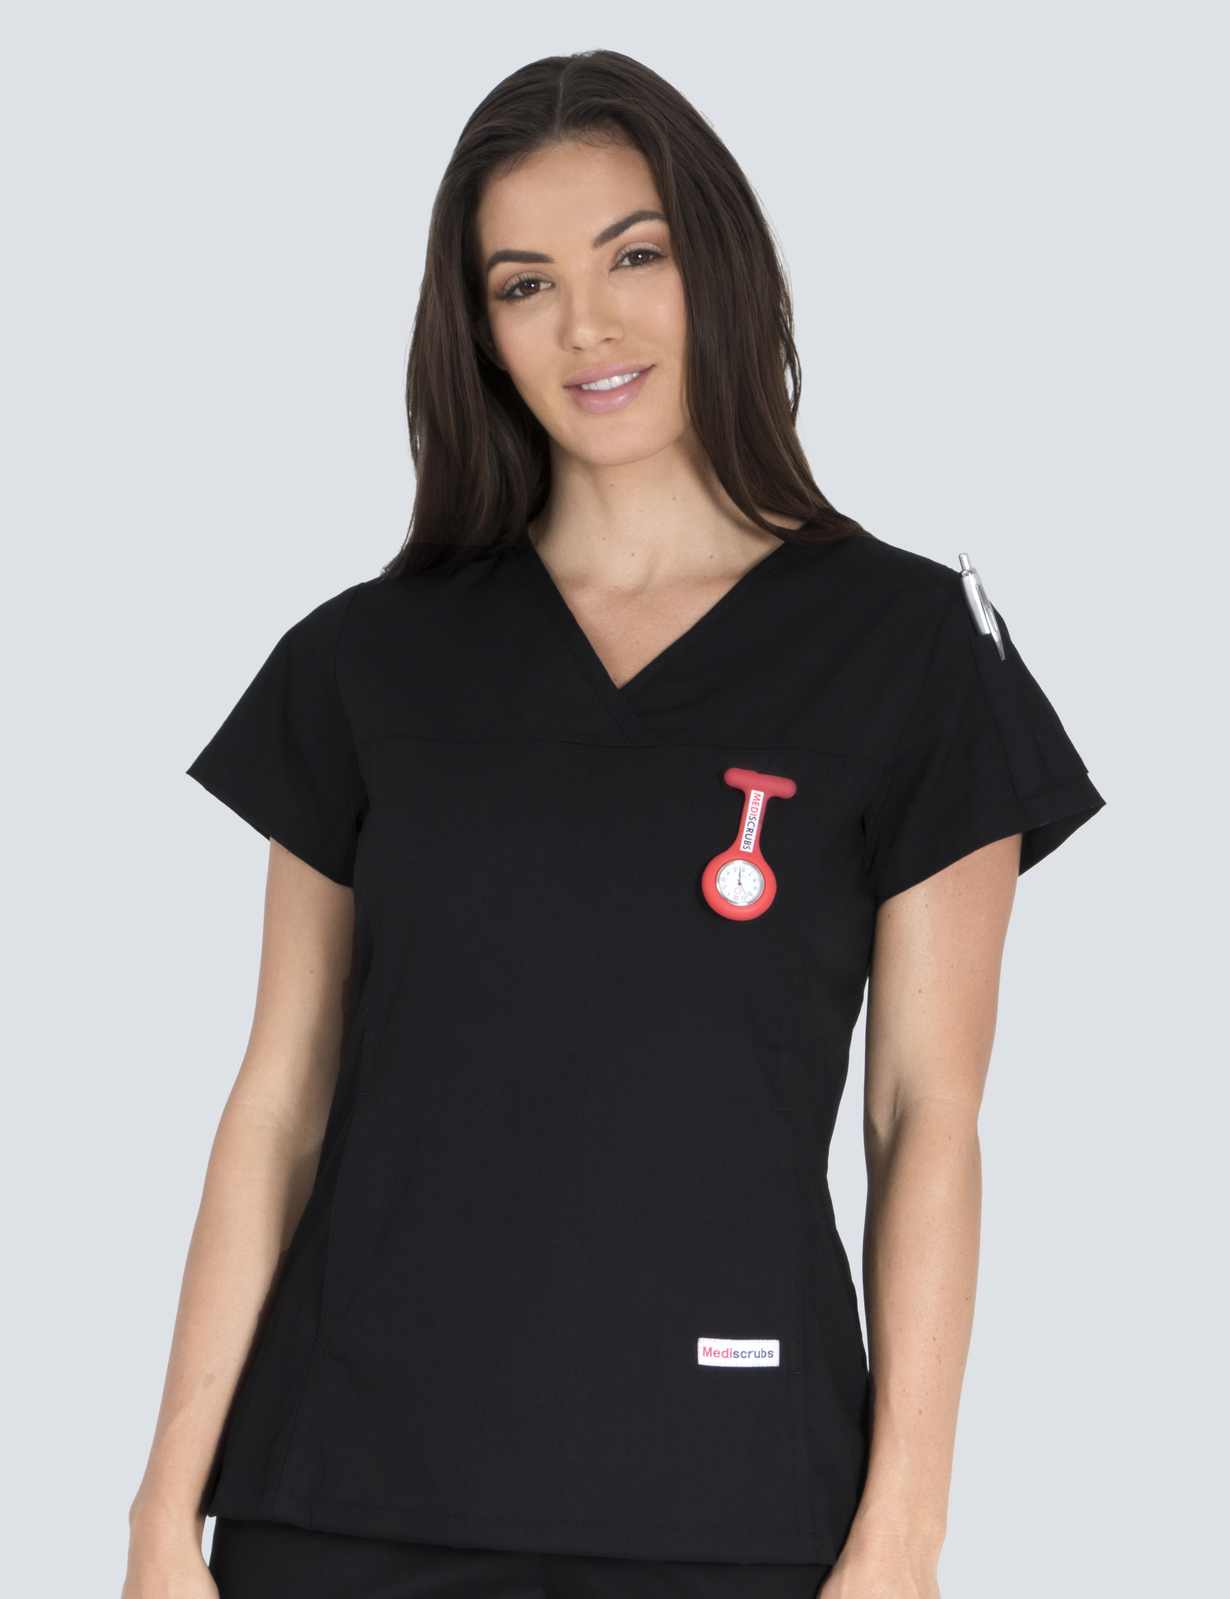 St Vincent's Hospital Sonographer  Uniform Top Only Bundle (Women's Fit Solid  Top in Black + Logo)